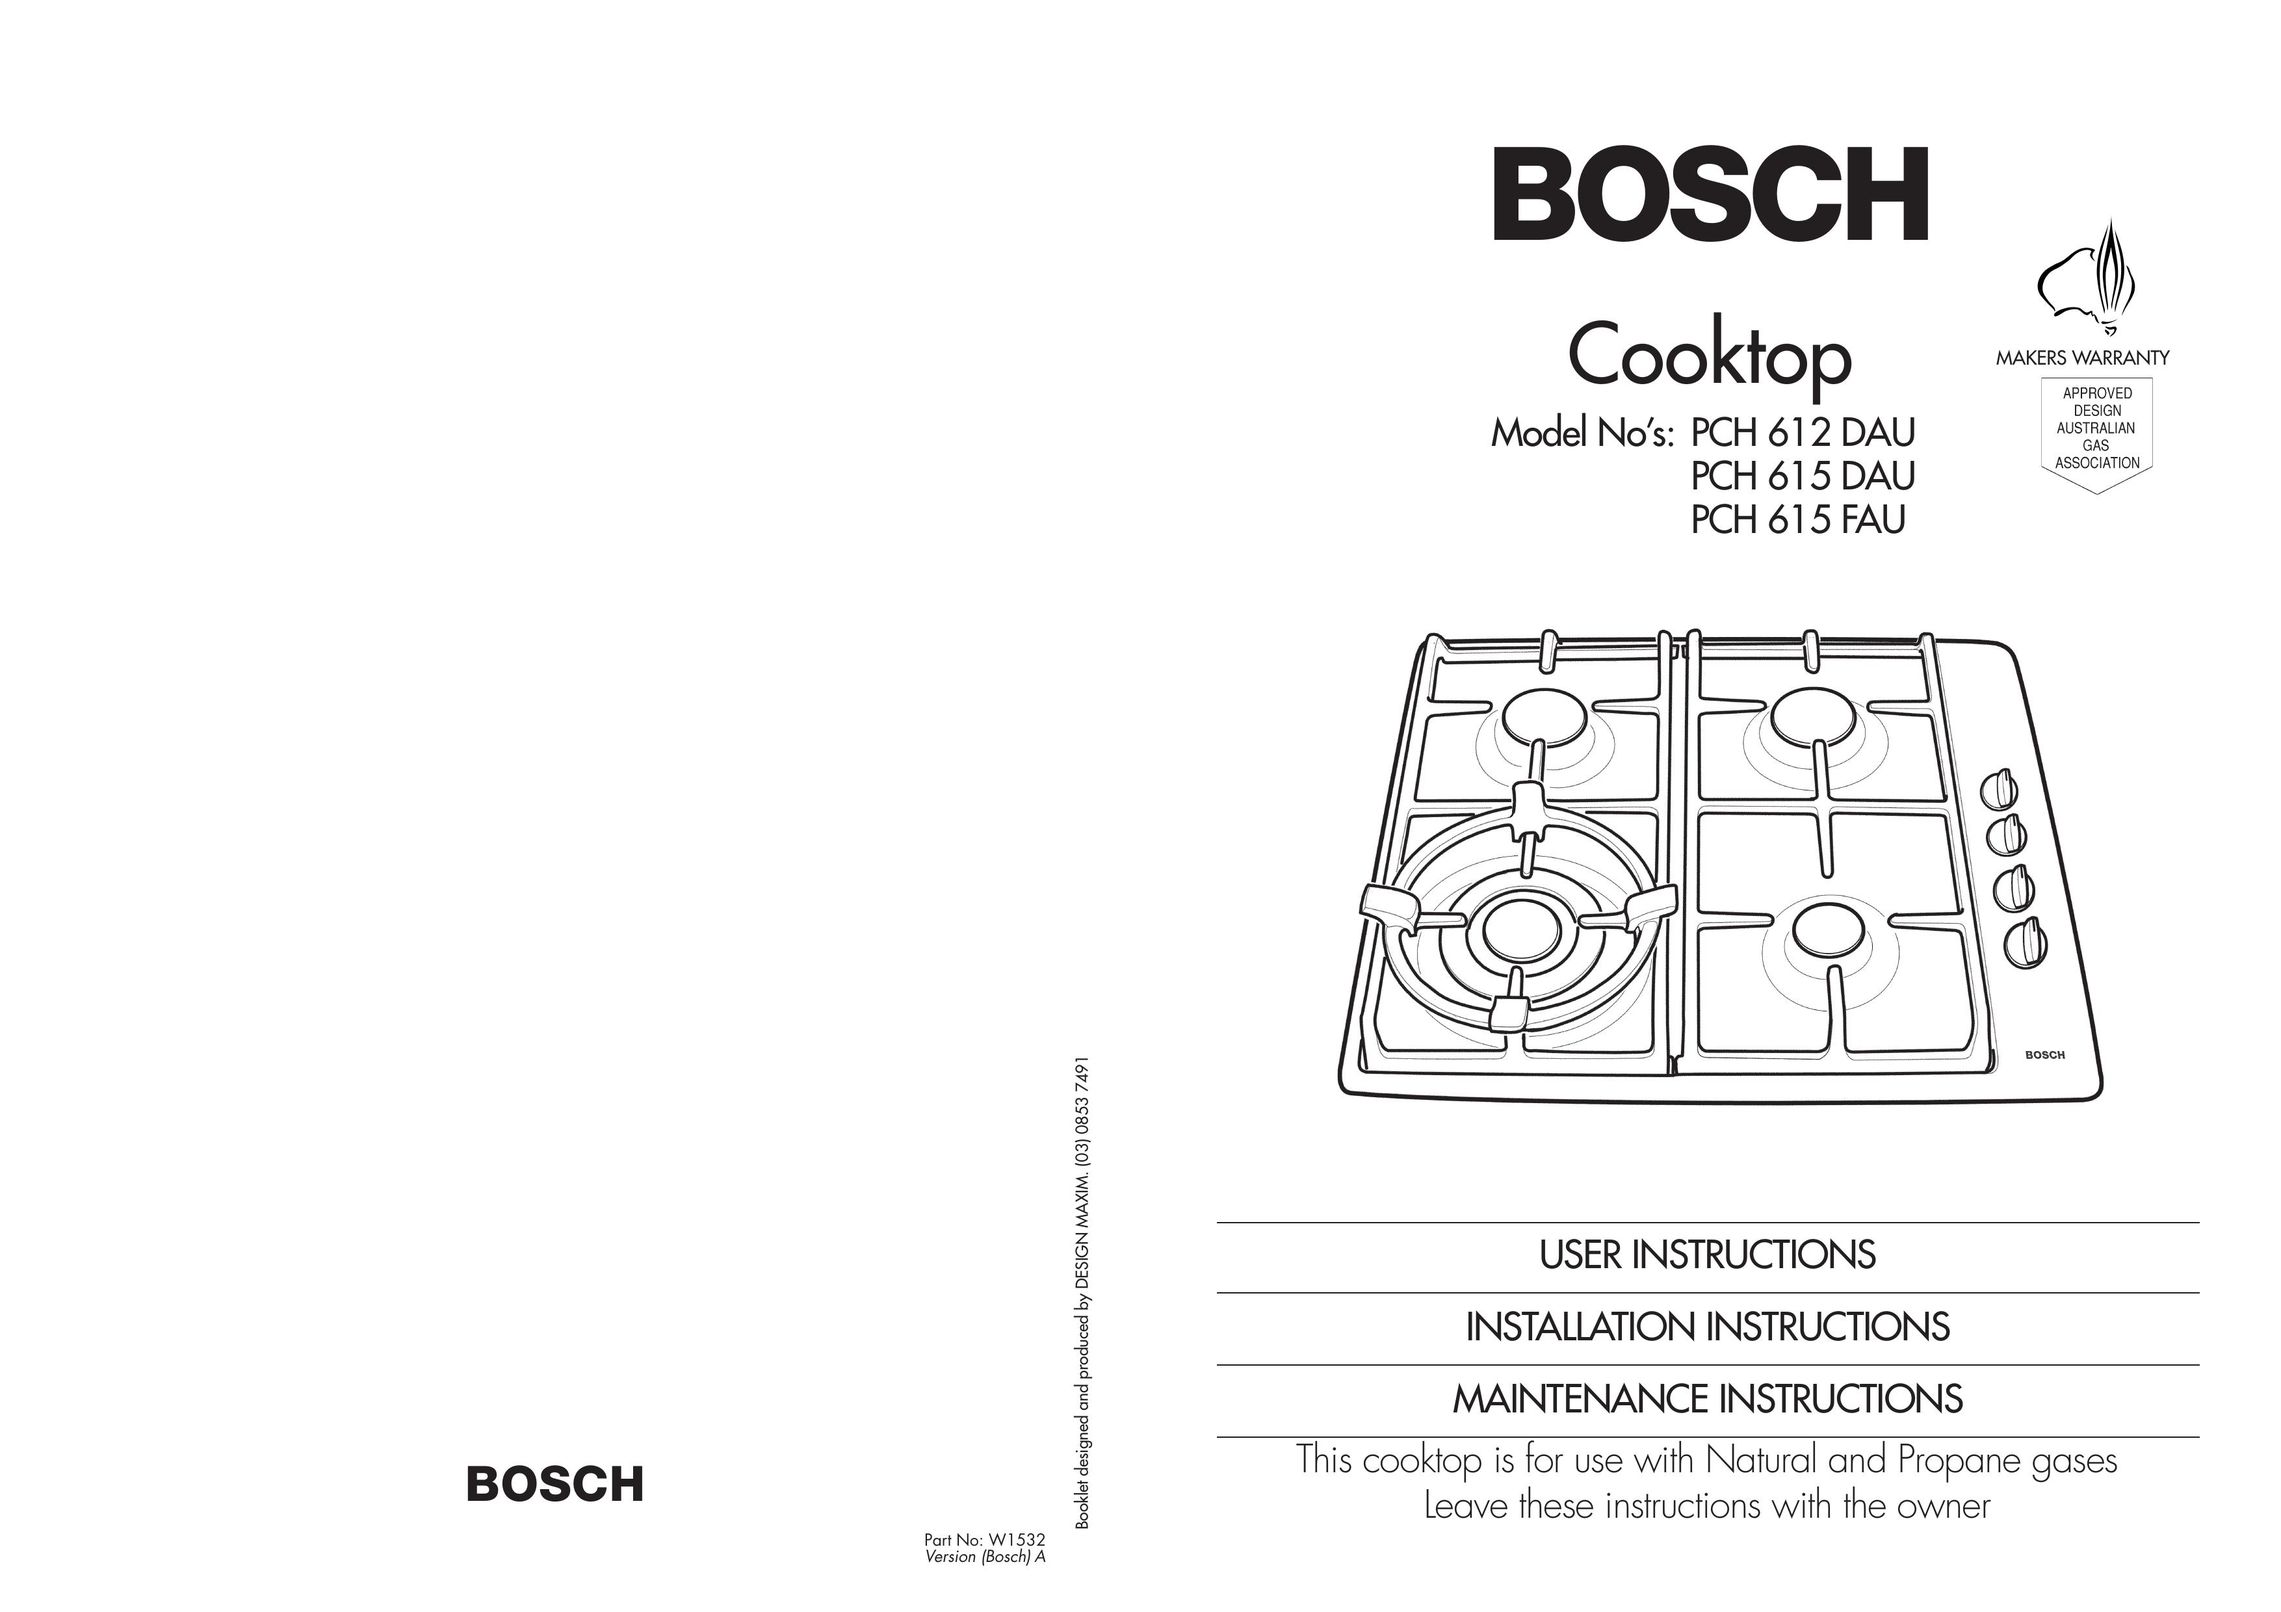 Bosch Appliances PCH 615 DAU Cooktop User Manual